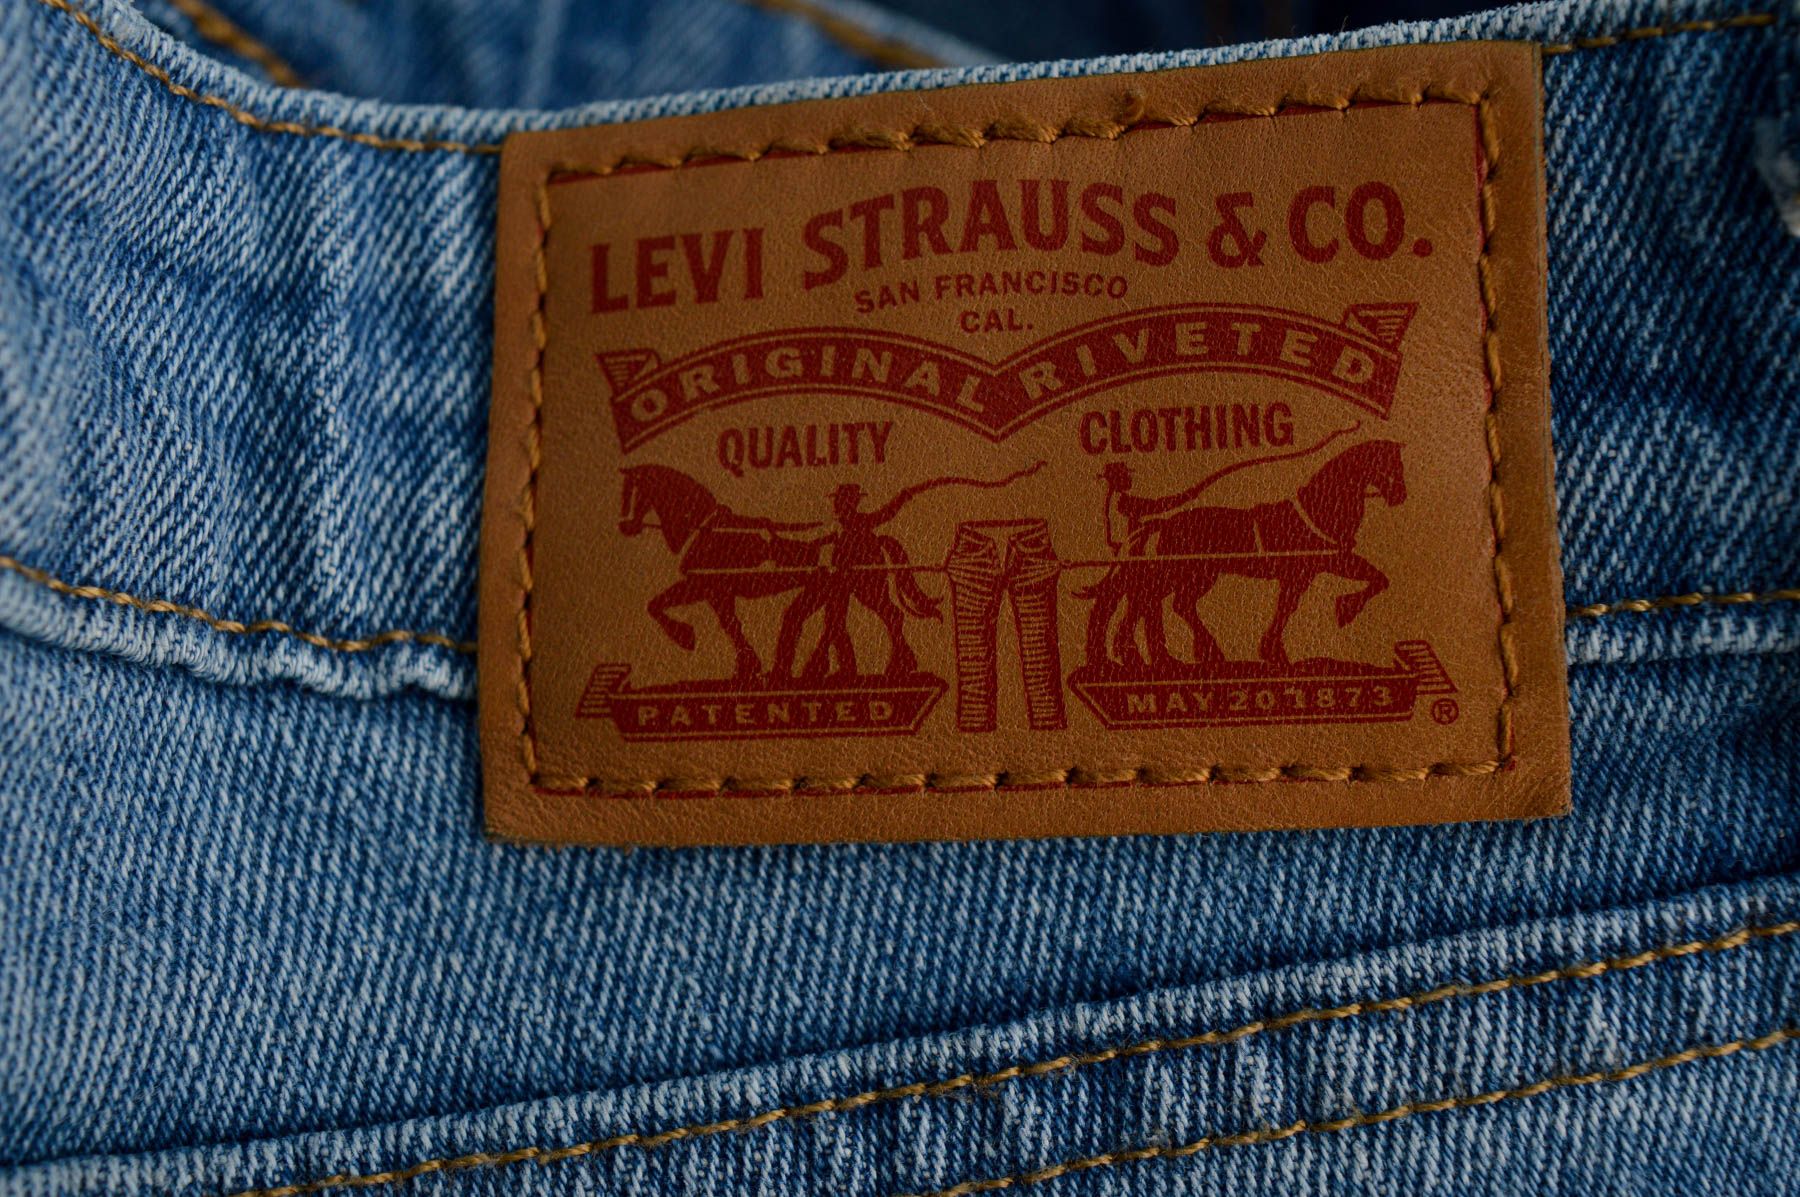 Women's jeans - Levi Strauss & Co. - 2